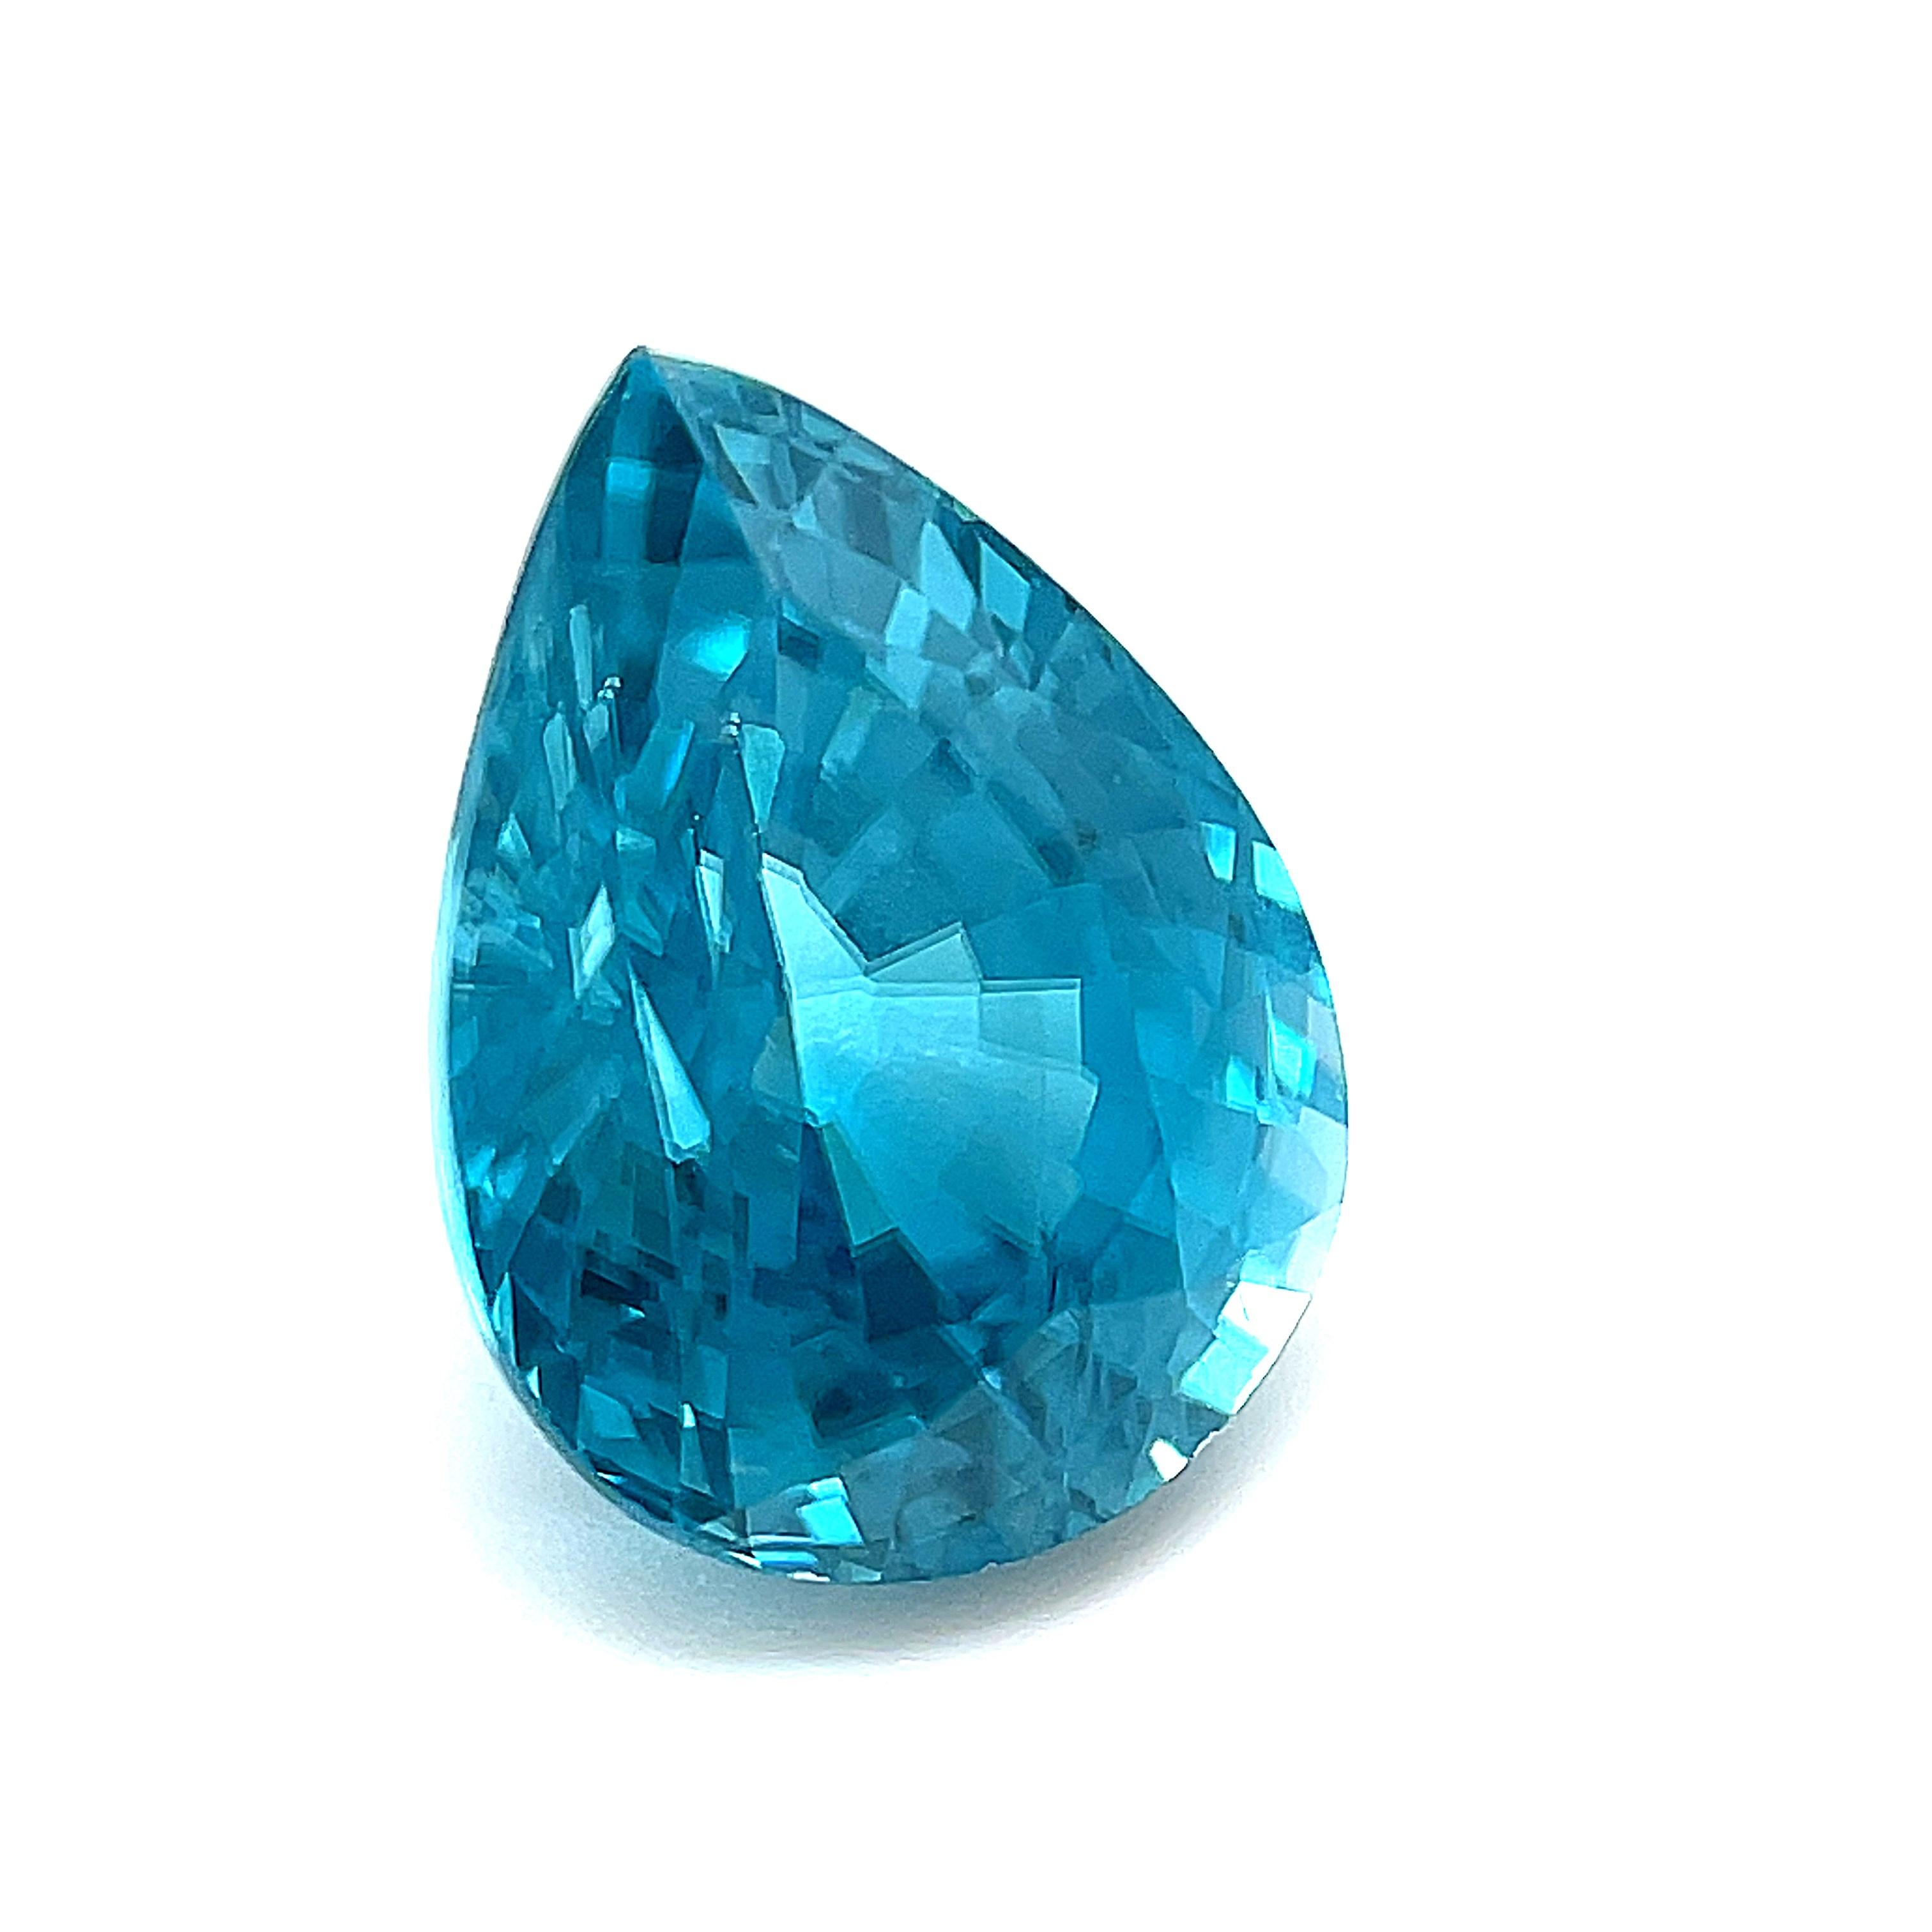 Artisan 4.72 Carat Pear Shaped Blue Zircon, Unset Loose Gemstone  For Sale